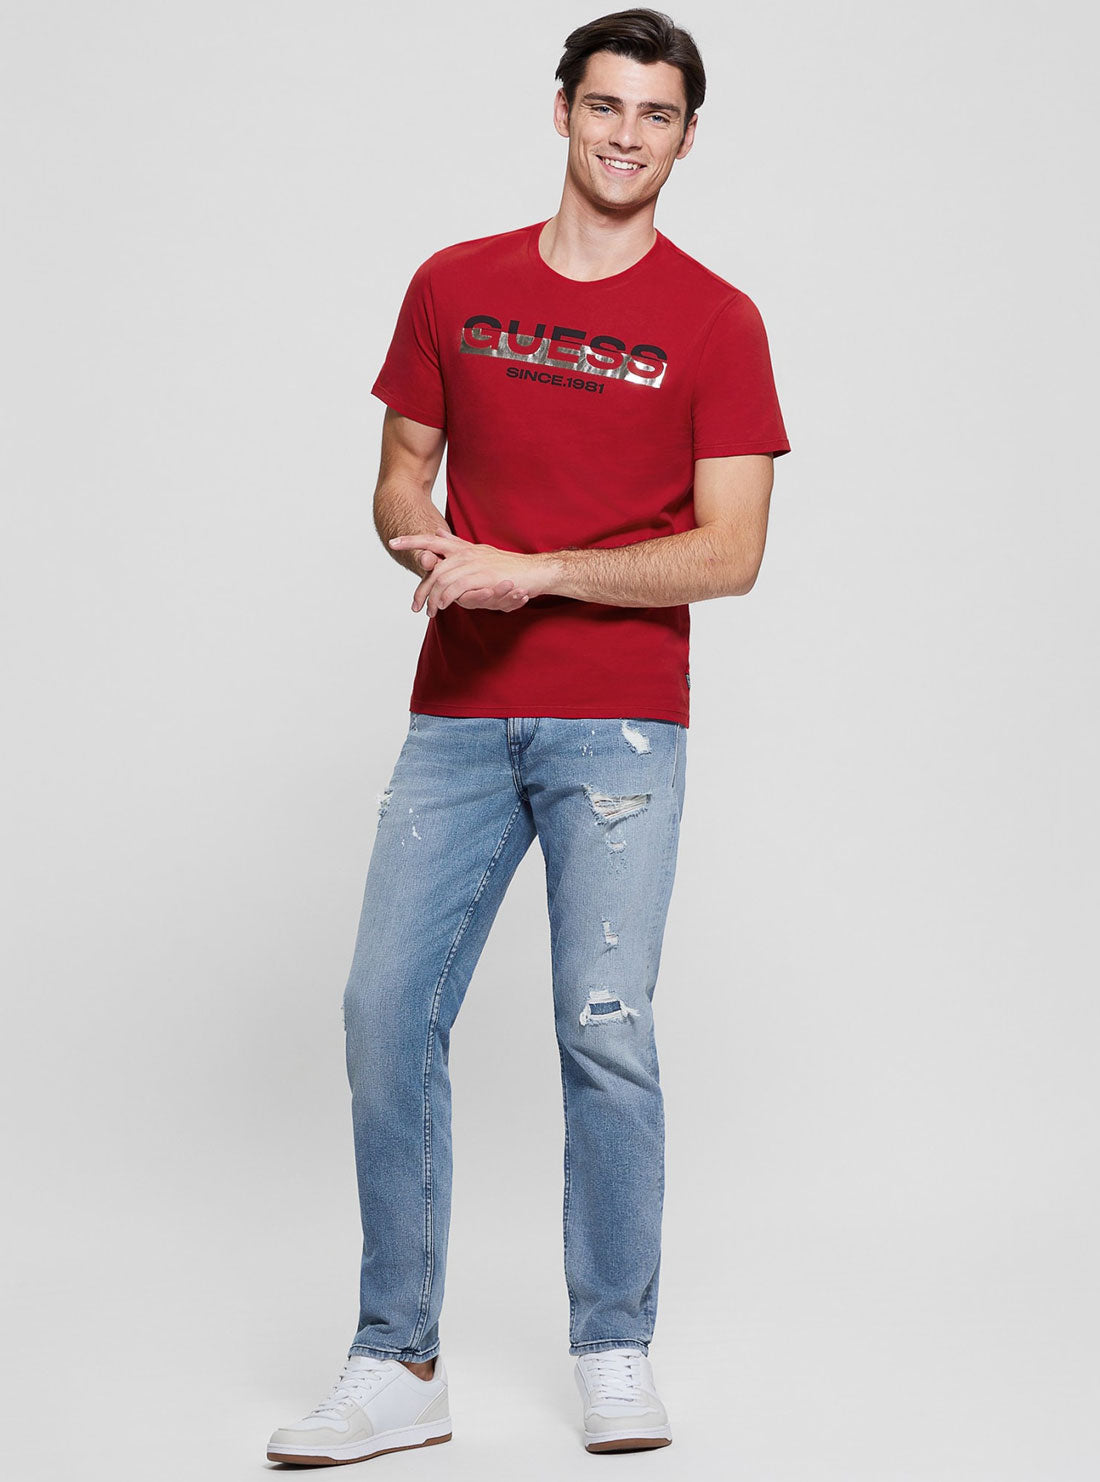 GUESS Red Foil Logo Short Sleeve T-Shirt full view